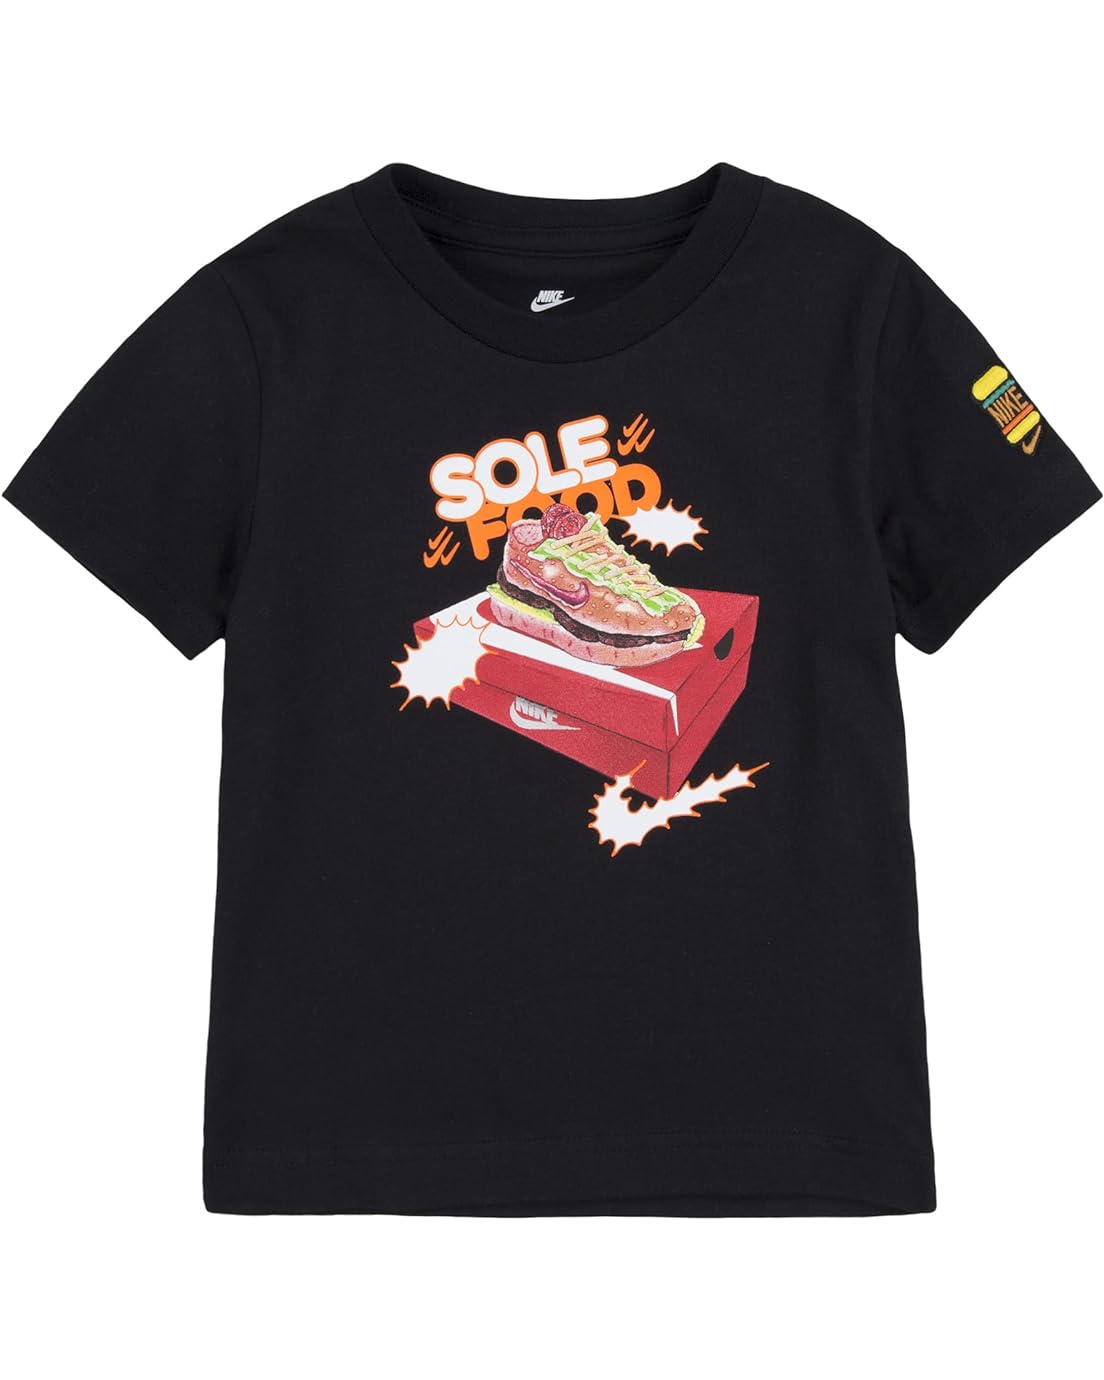 Nike Kids Sole Food Short Sleeve T-Shirt (Toddler)